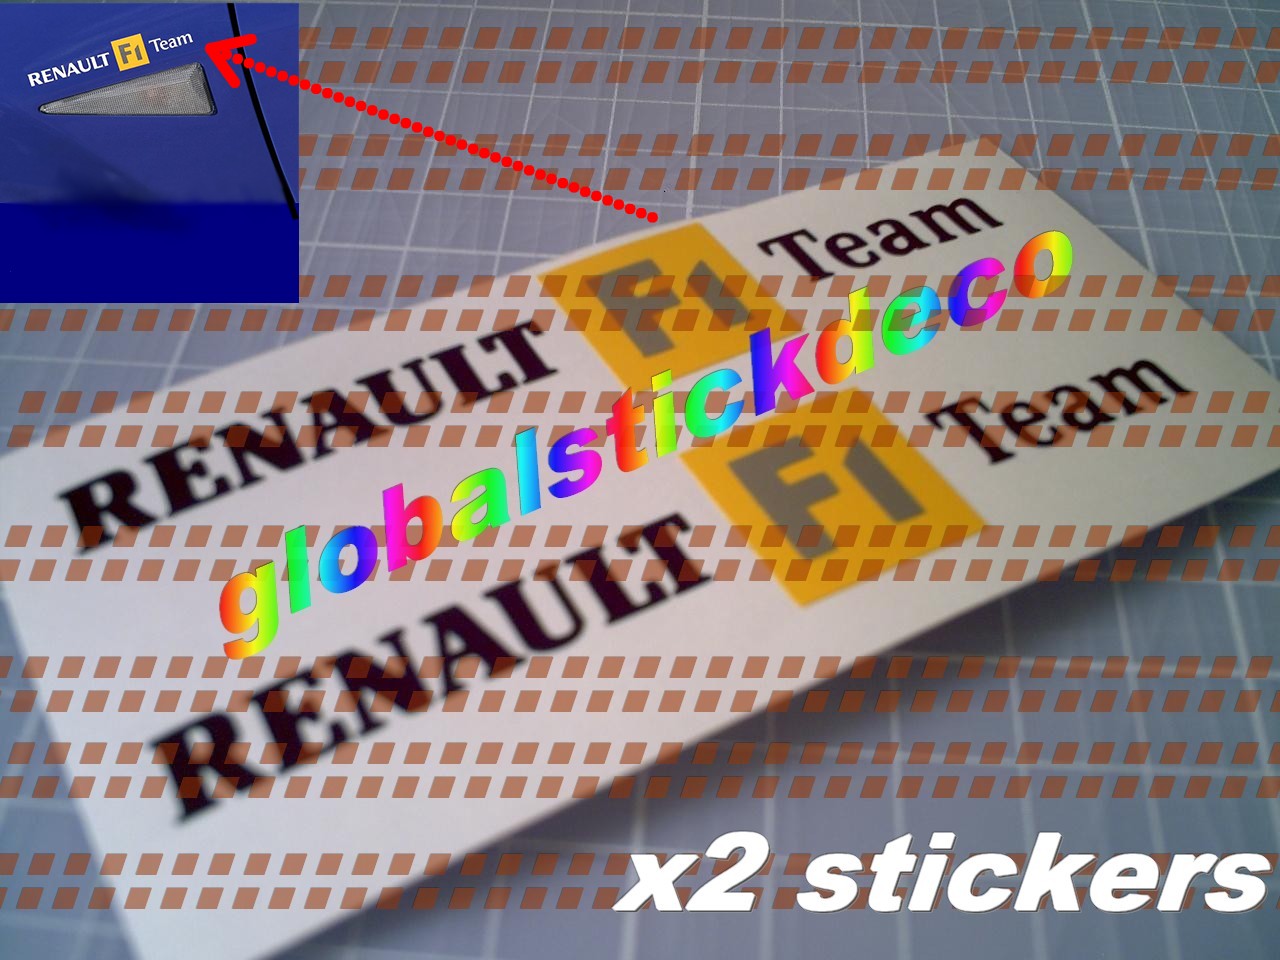 Stickers milieuavril renault sport mg etc etc 3